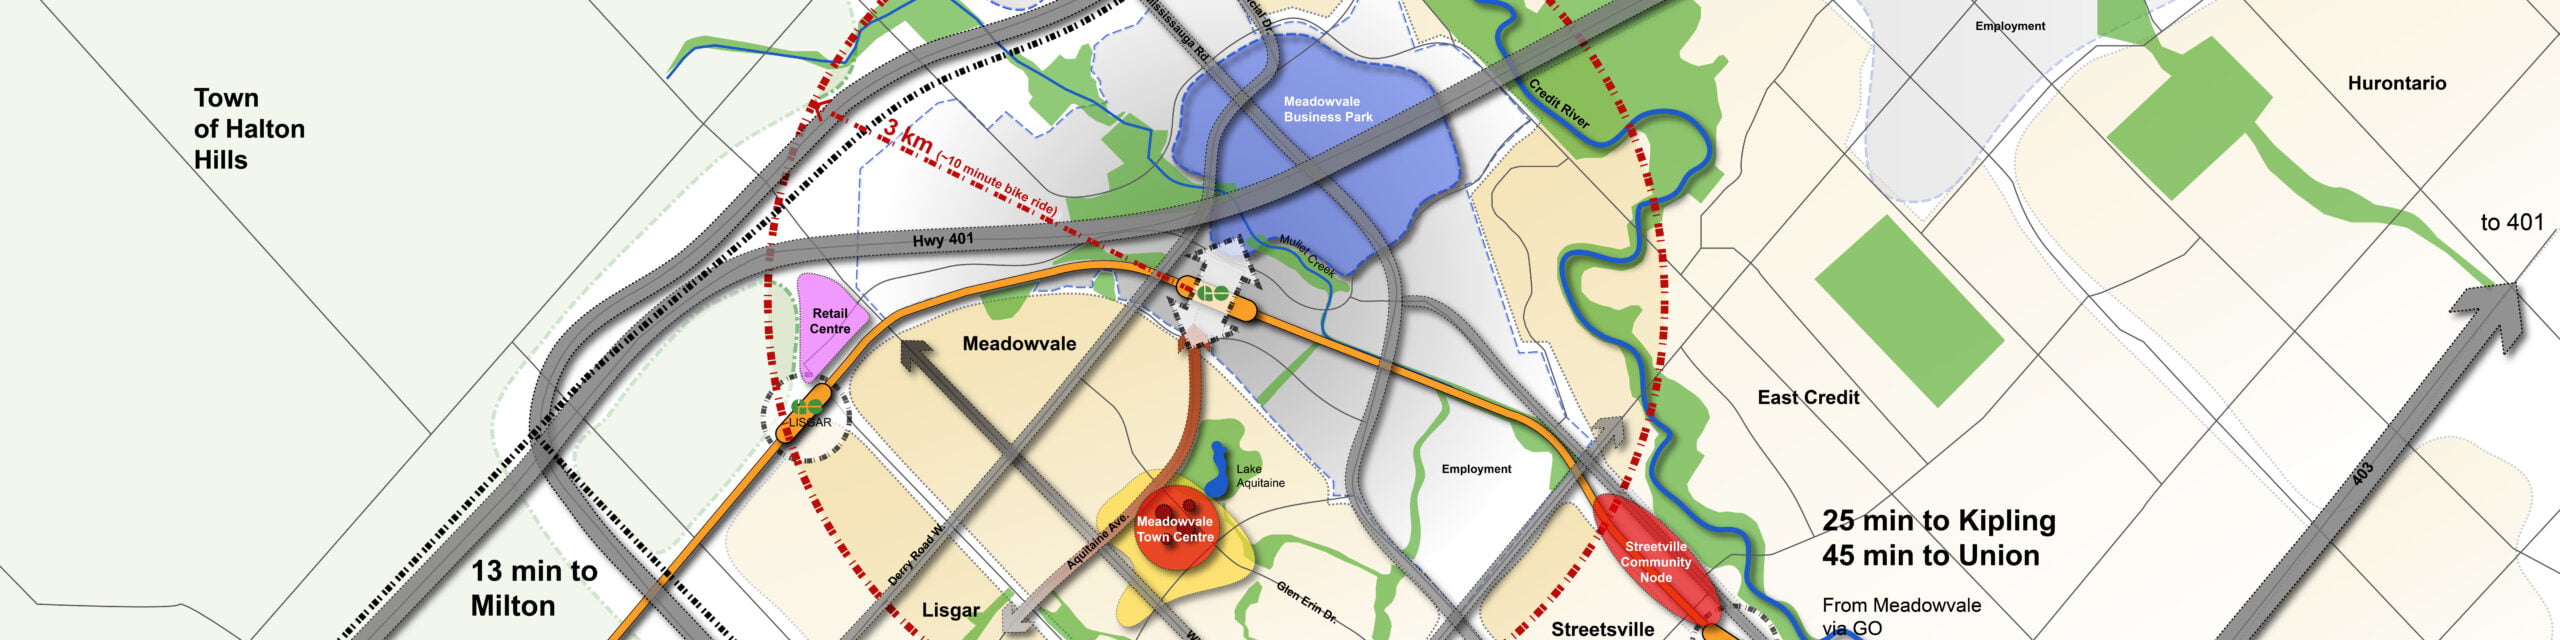 Meadowvale GO Station Area Concept Map